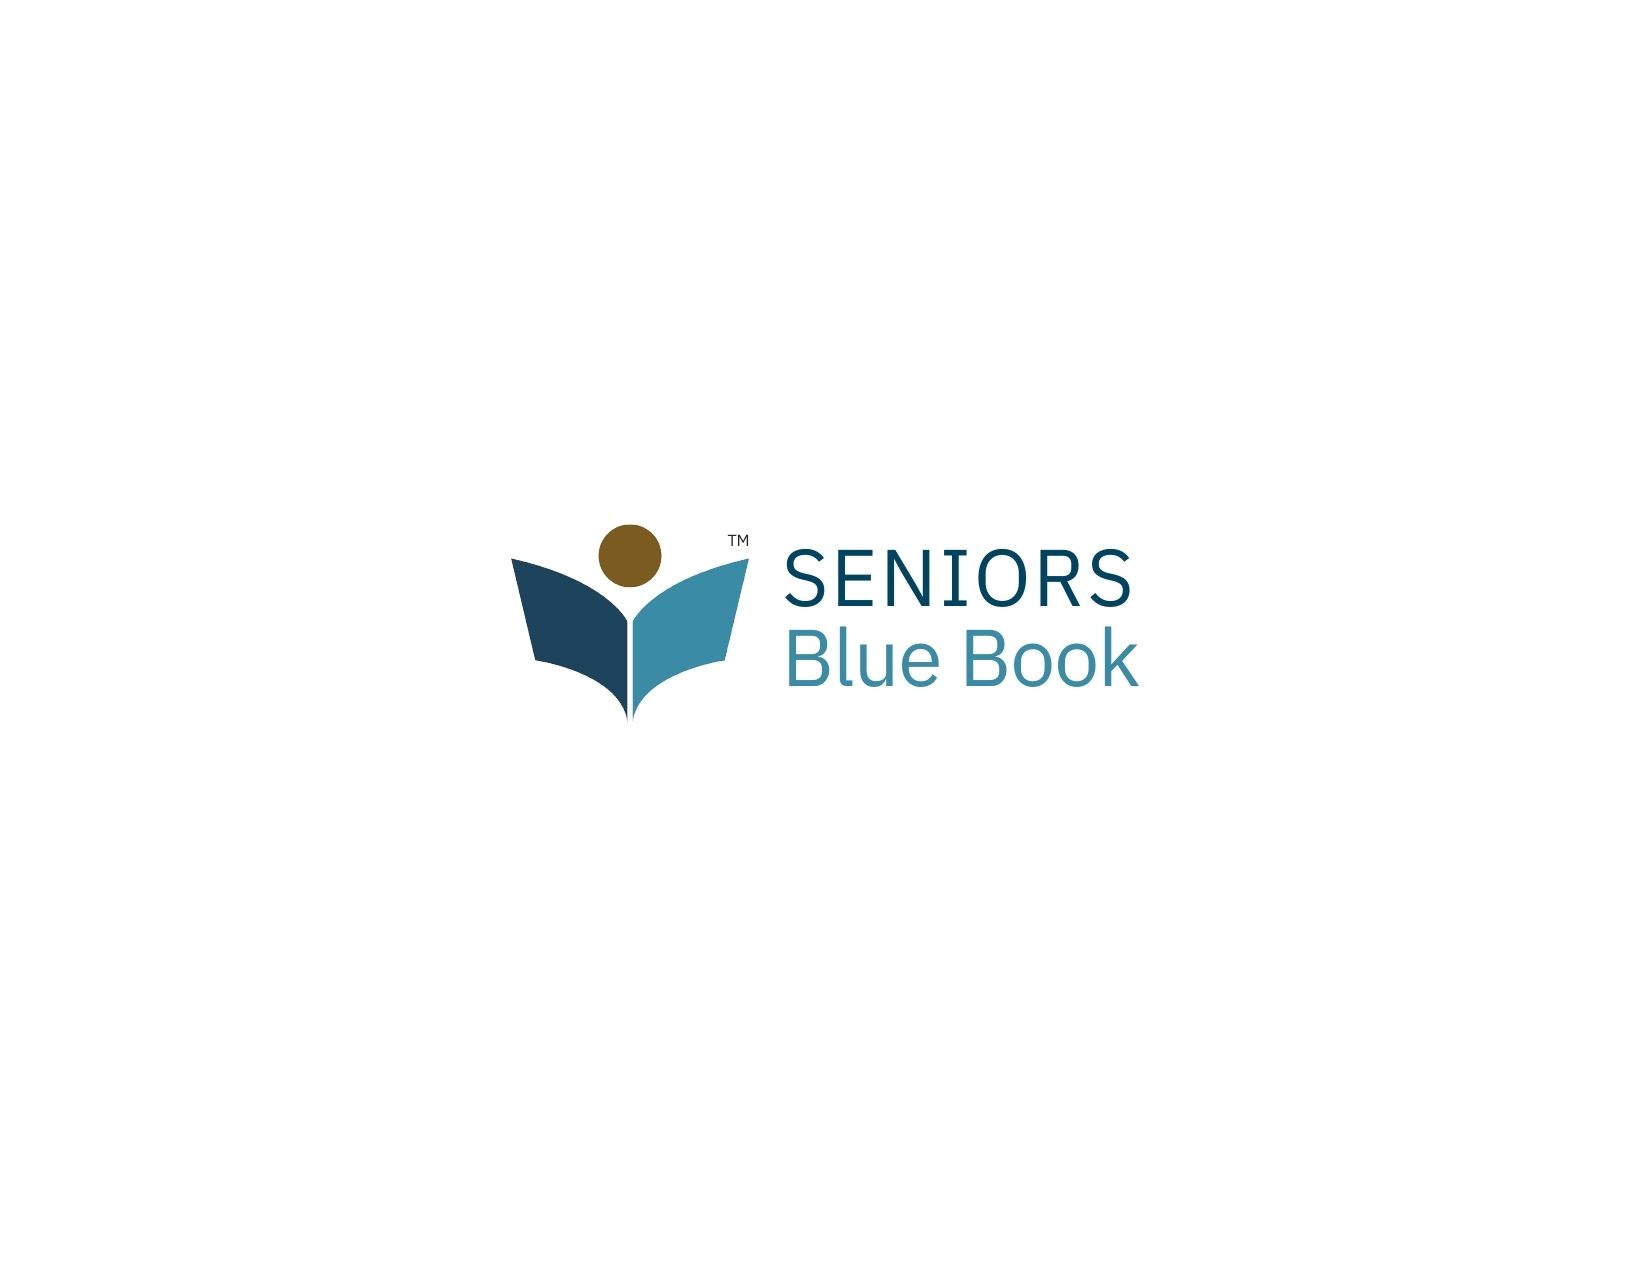 Seniors Blue Book (Tier 2)